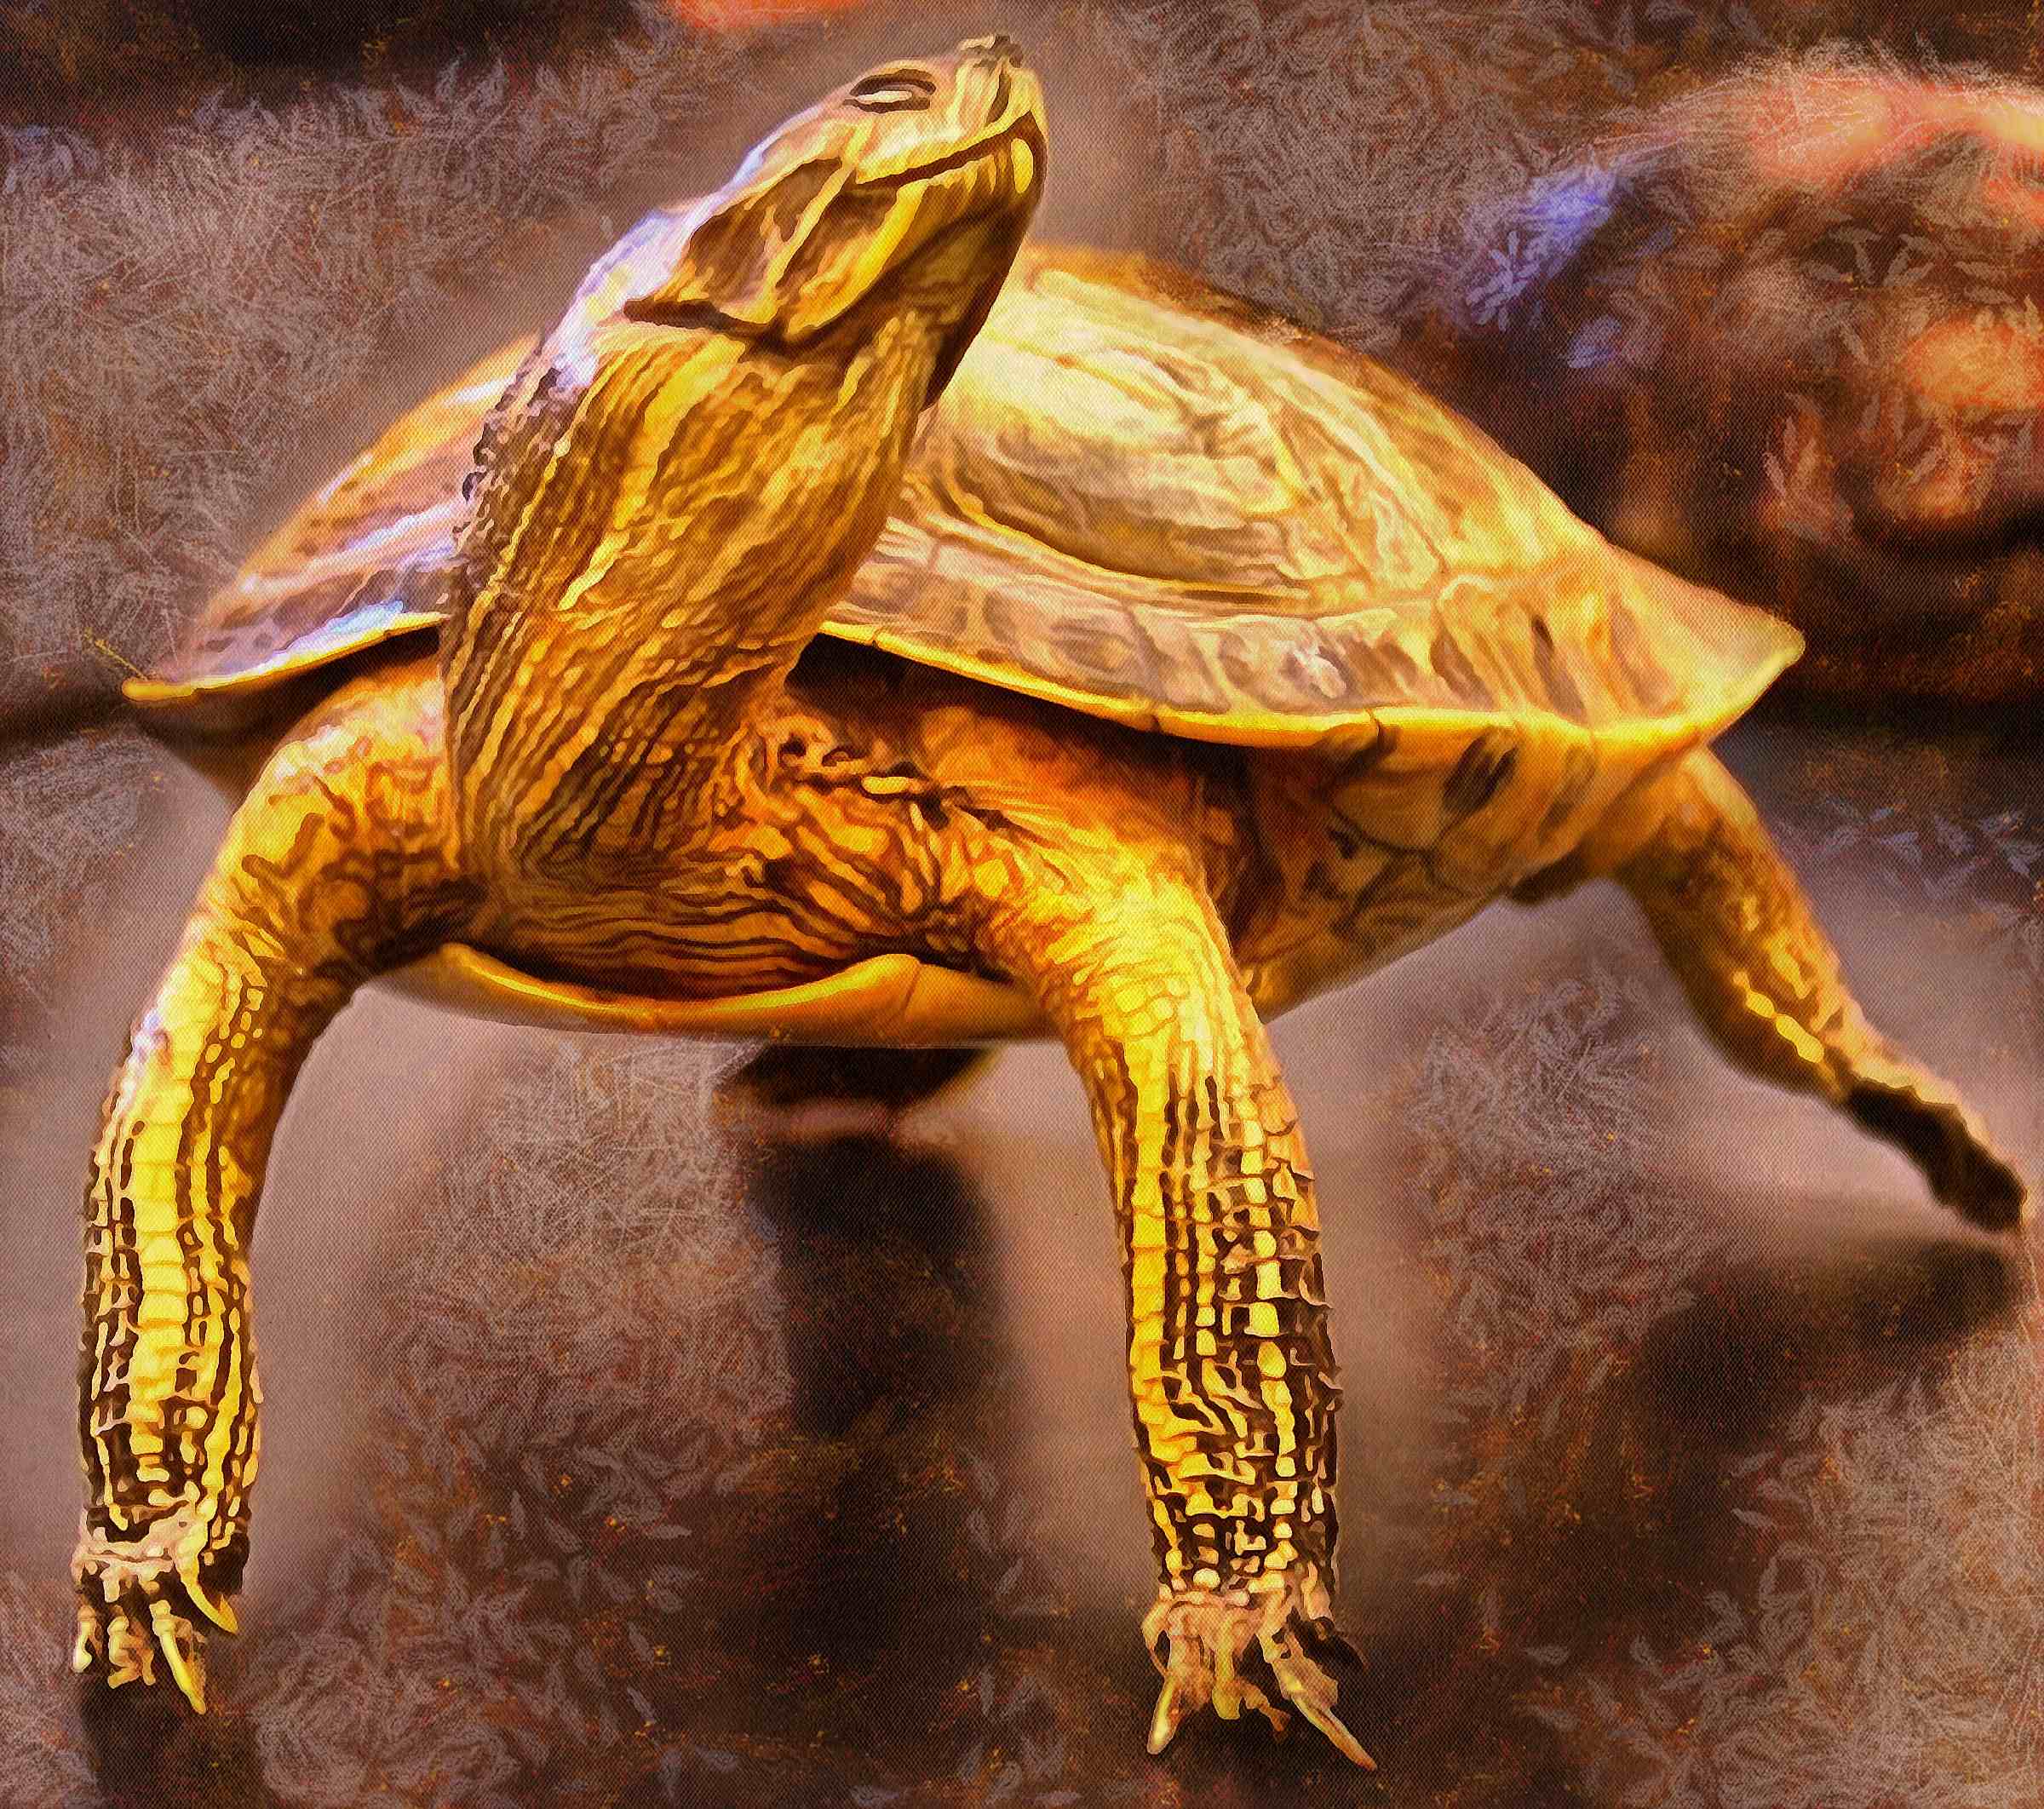 Turtle, Tortoise, Turtle free images, chelonian, leatherback, turtle, – Turtle free images, Tortoise free , Turtle stock free images, Download free images turtles, tortoise free public domain images, tortoise public domain images!